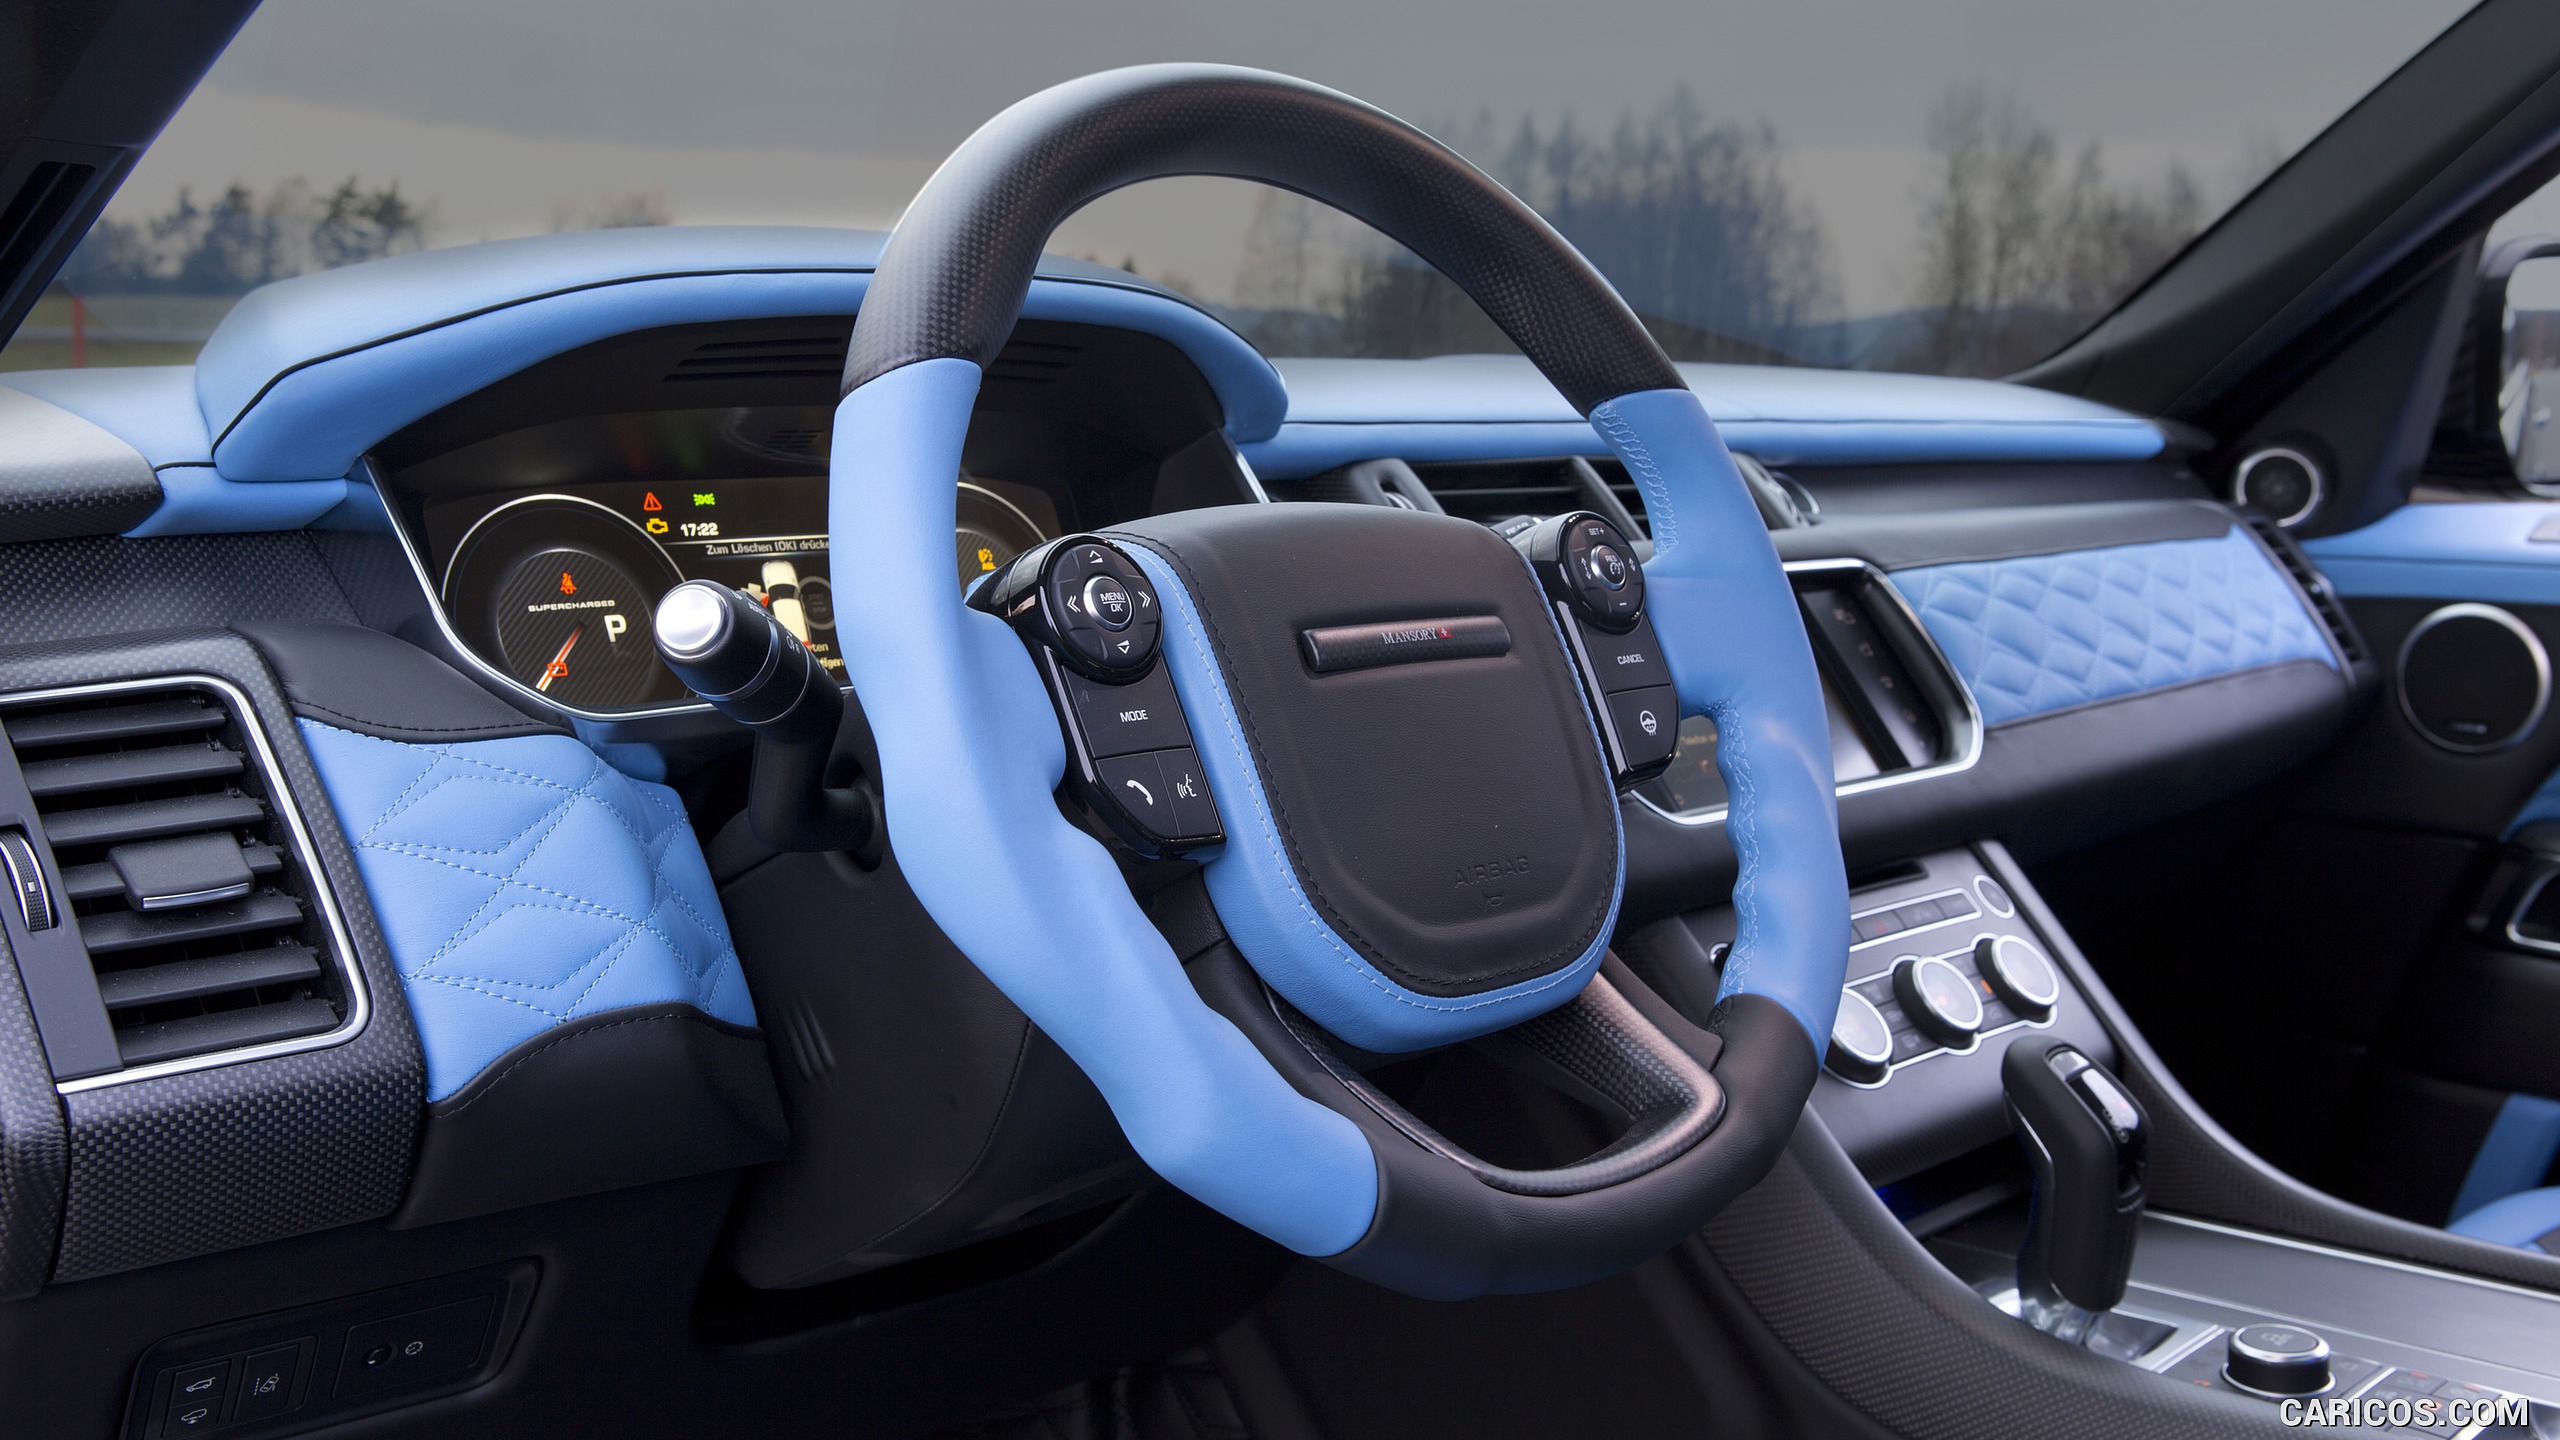 2016 MANSORY Range Rover Sport - Interior, Steering Wheel, #6 of 7